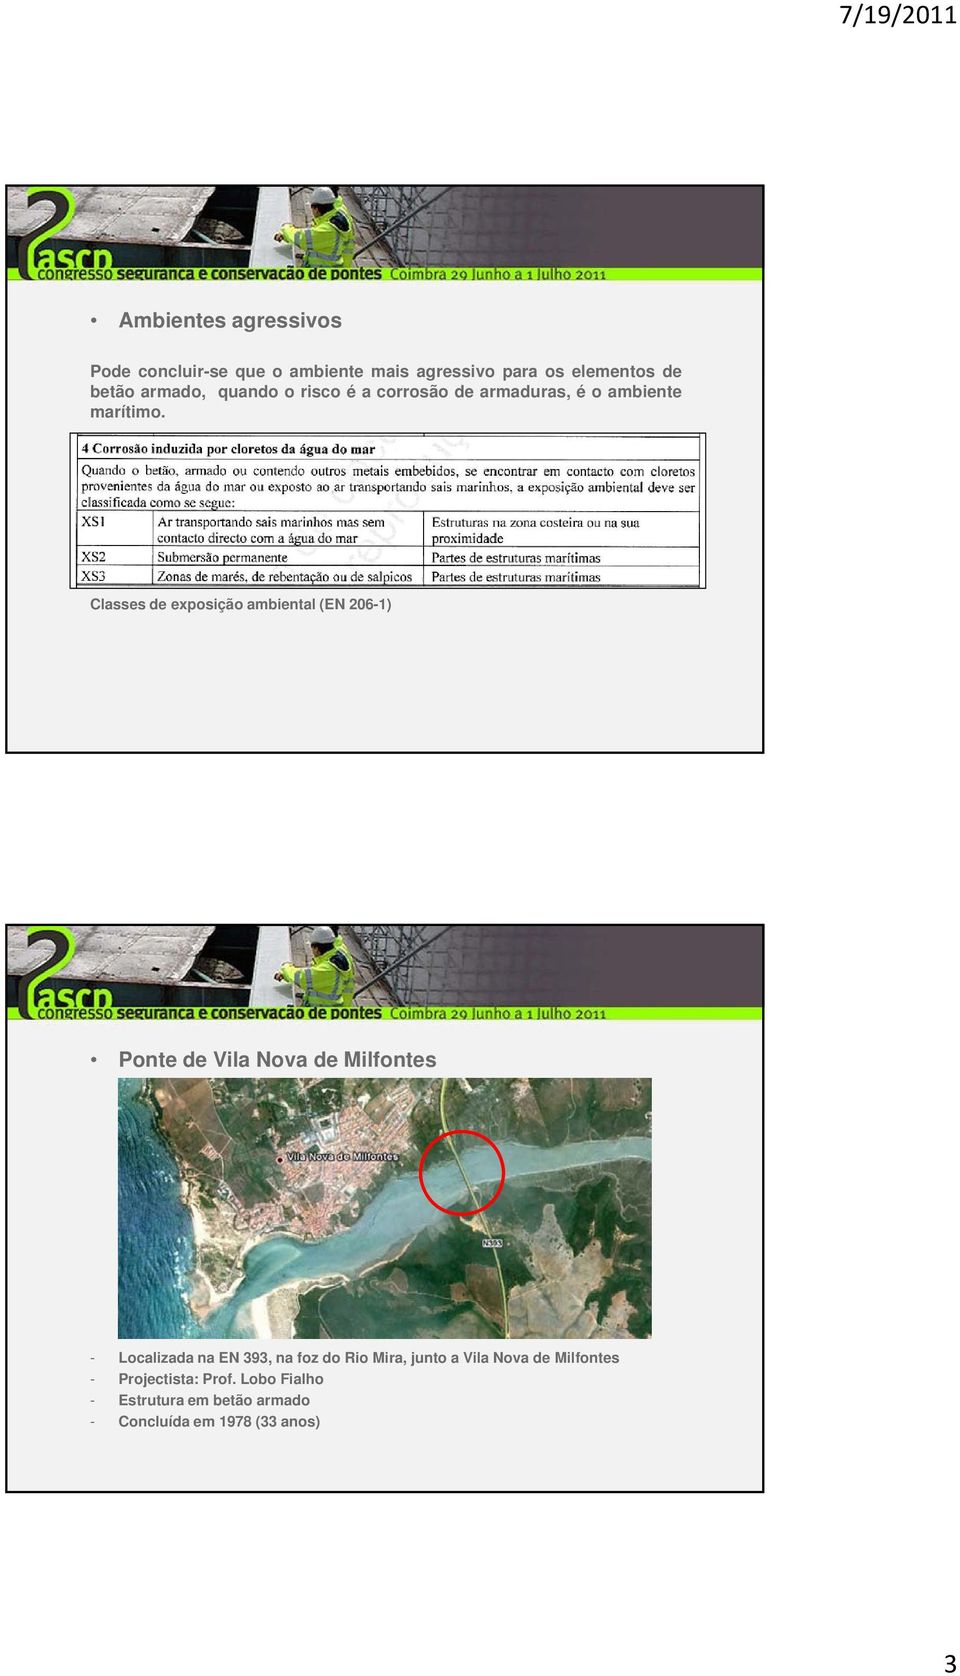 Classes de exposição ambiental (EN 206-1) - Localizada na EN 393, na foz do Rio Mira, junto a